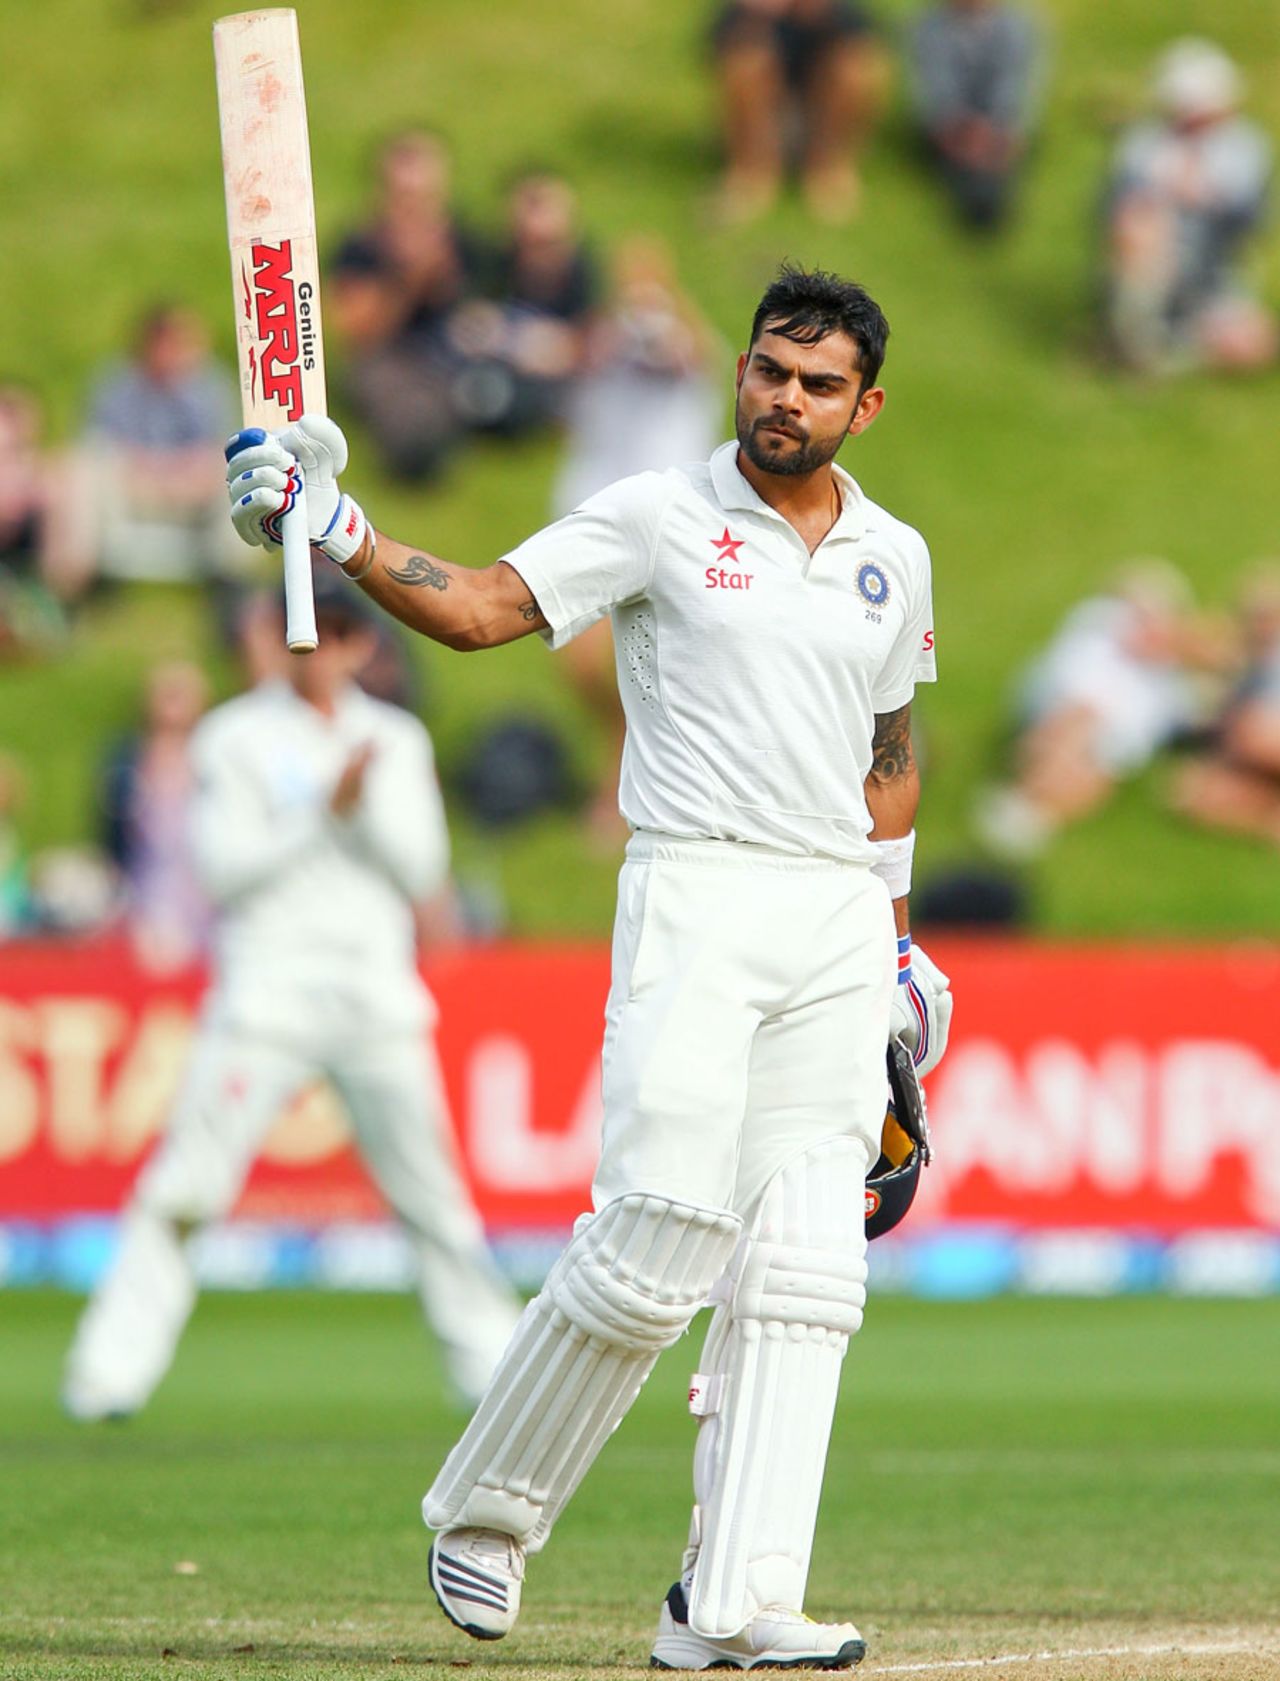 Virat Kohli raises the bat after reaching his hundred, New Zealand v India, 2nd Test, Wellington, 5th day, February 18, 2014